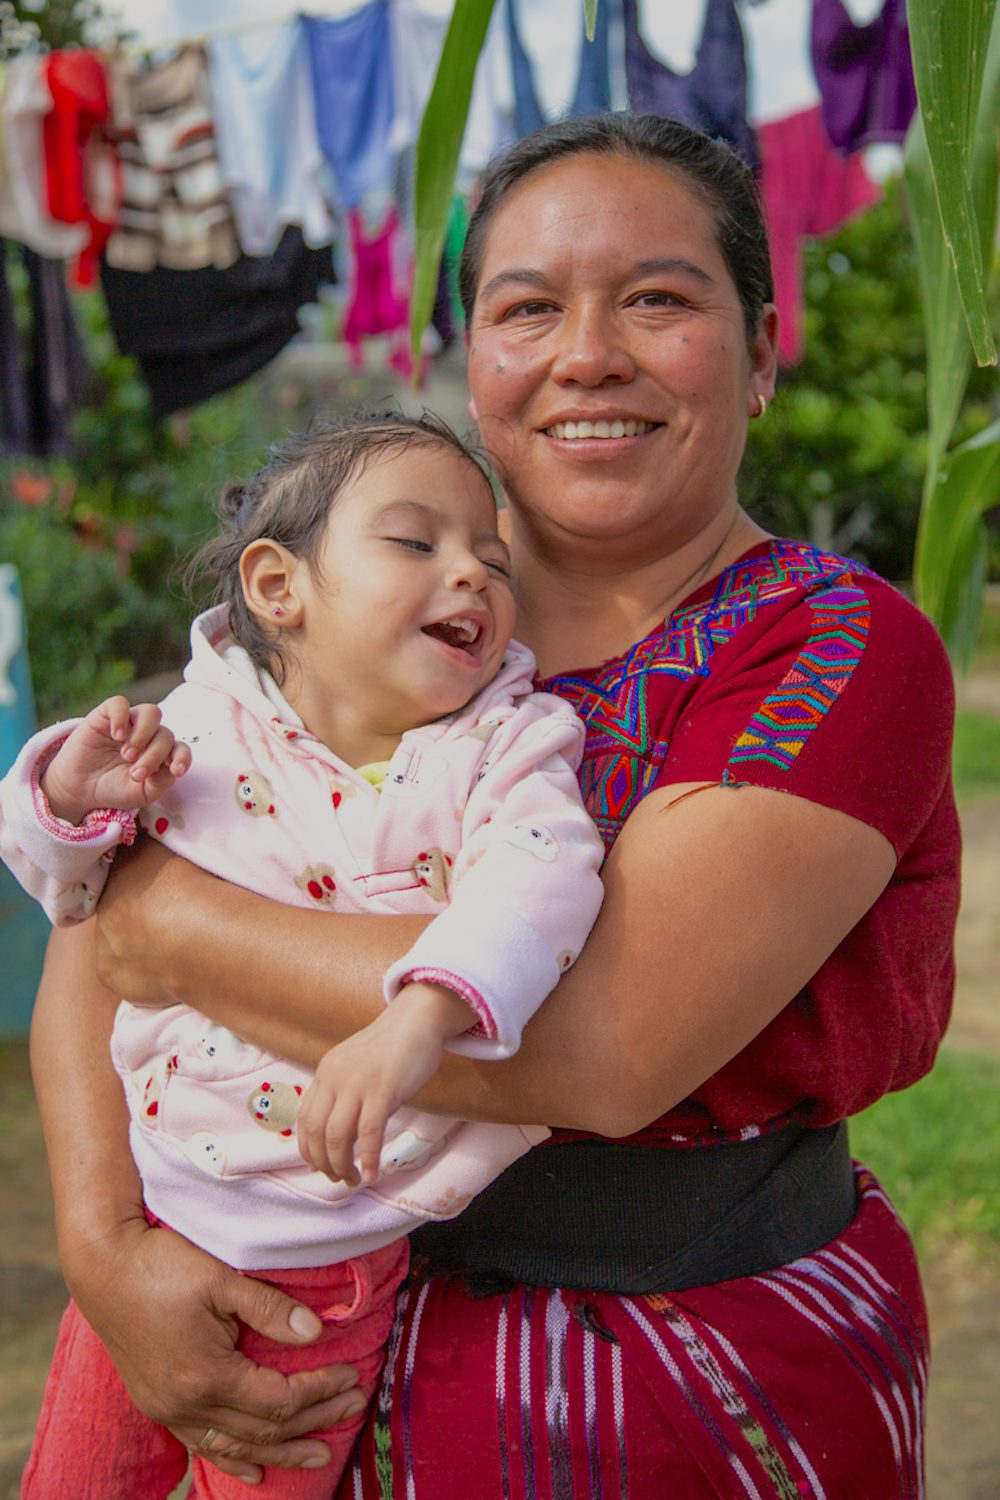 Juana poses with her daughter, Samara, who has cerebral palsy.